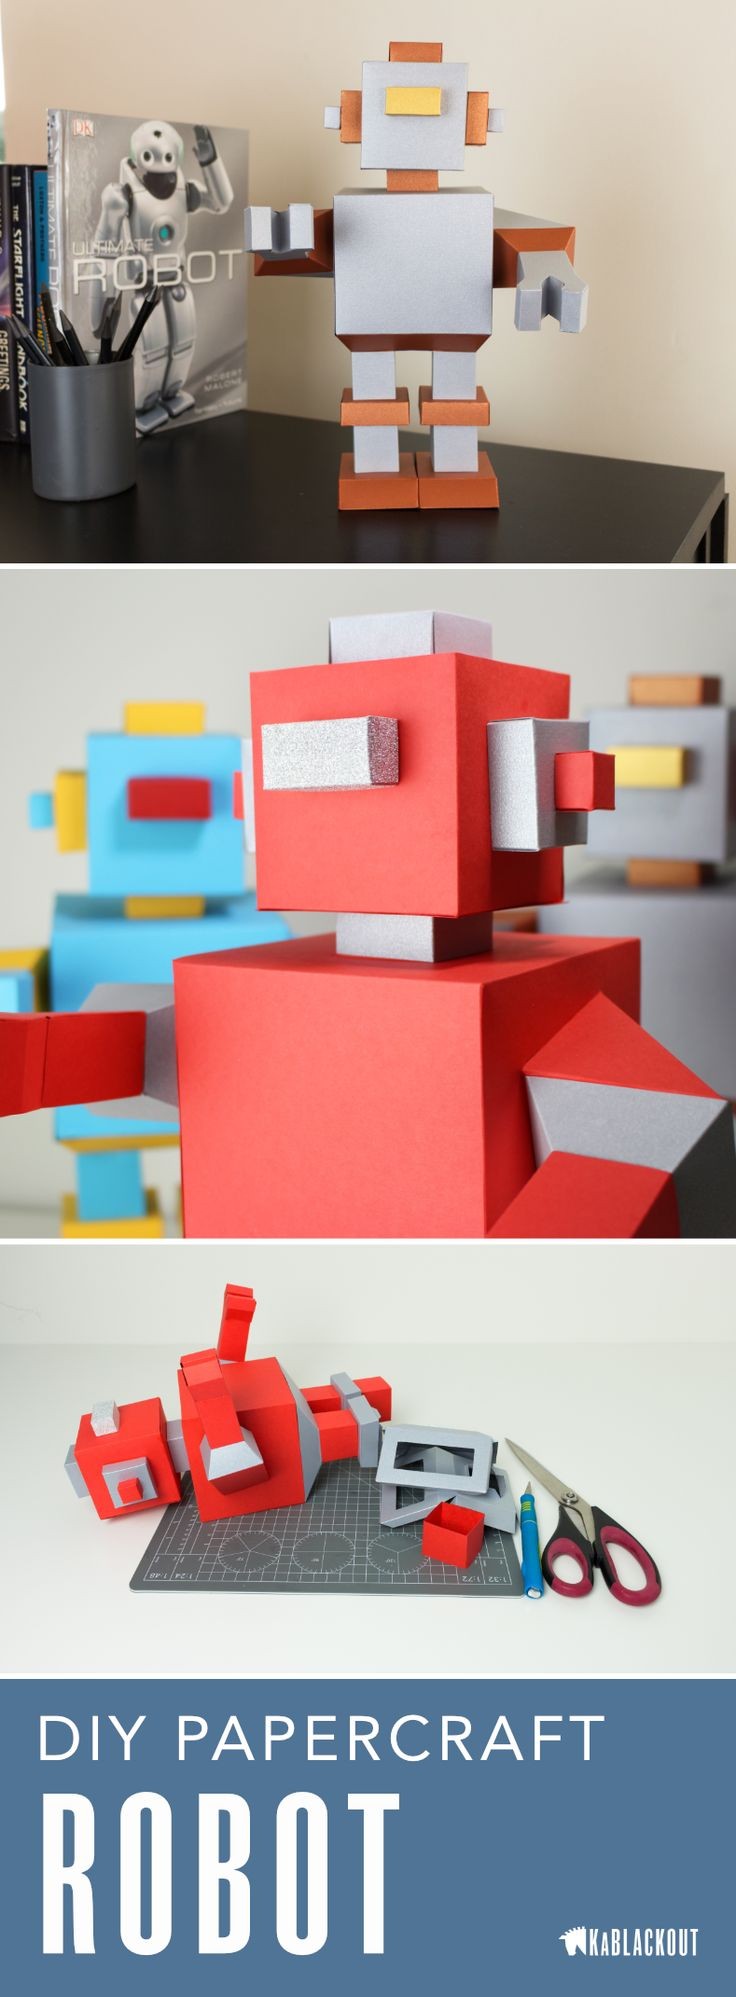 Papercraft Robot 71 Best Papercraft Images On Pinterest